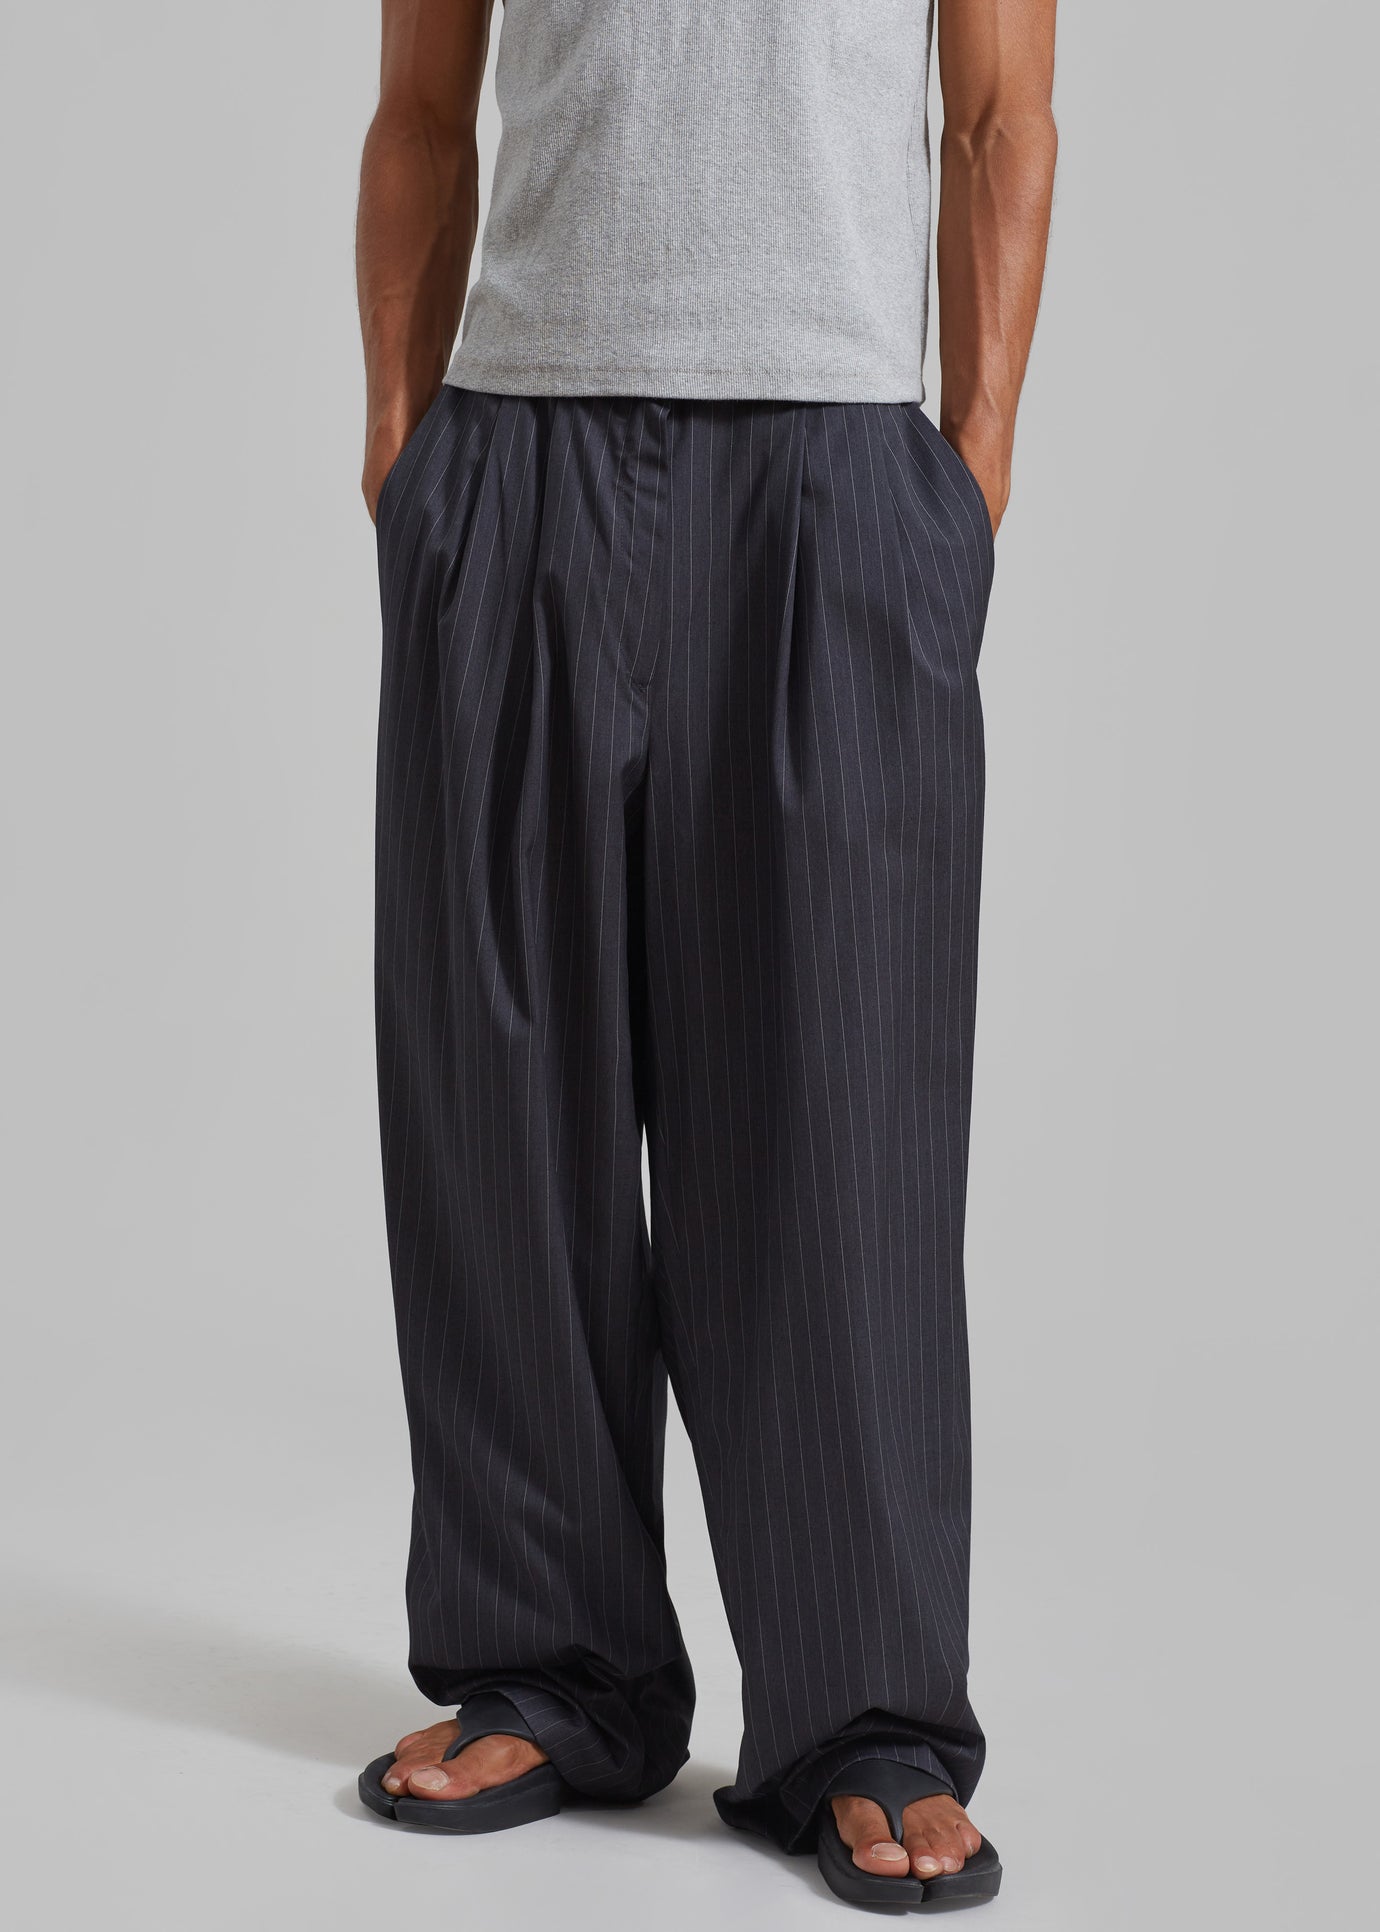 Peyton Pleated Pants - Grey Pinstripe